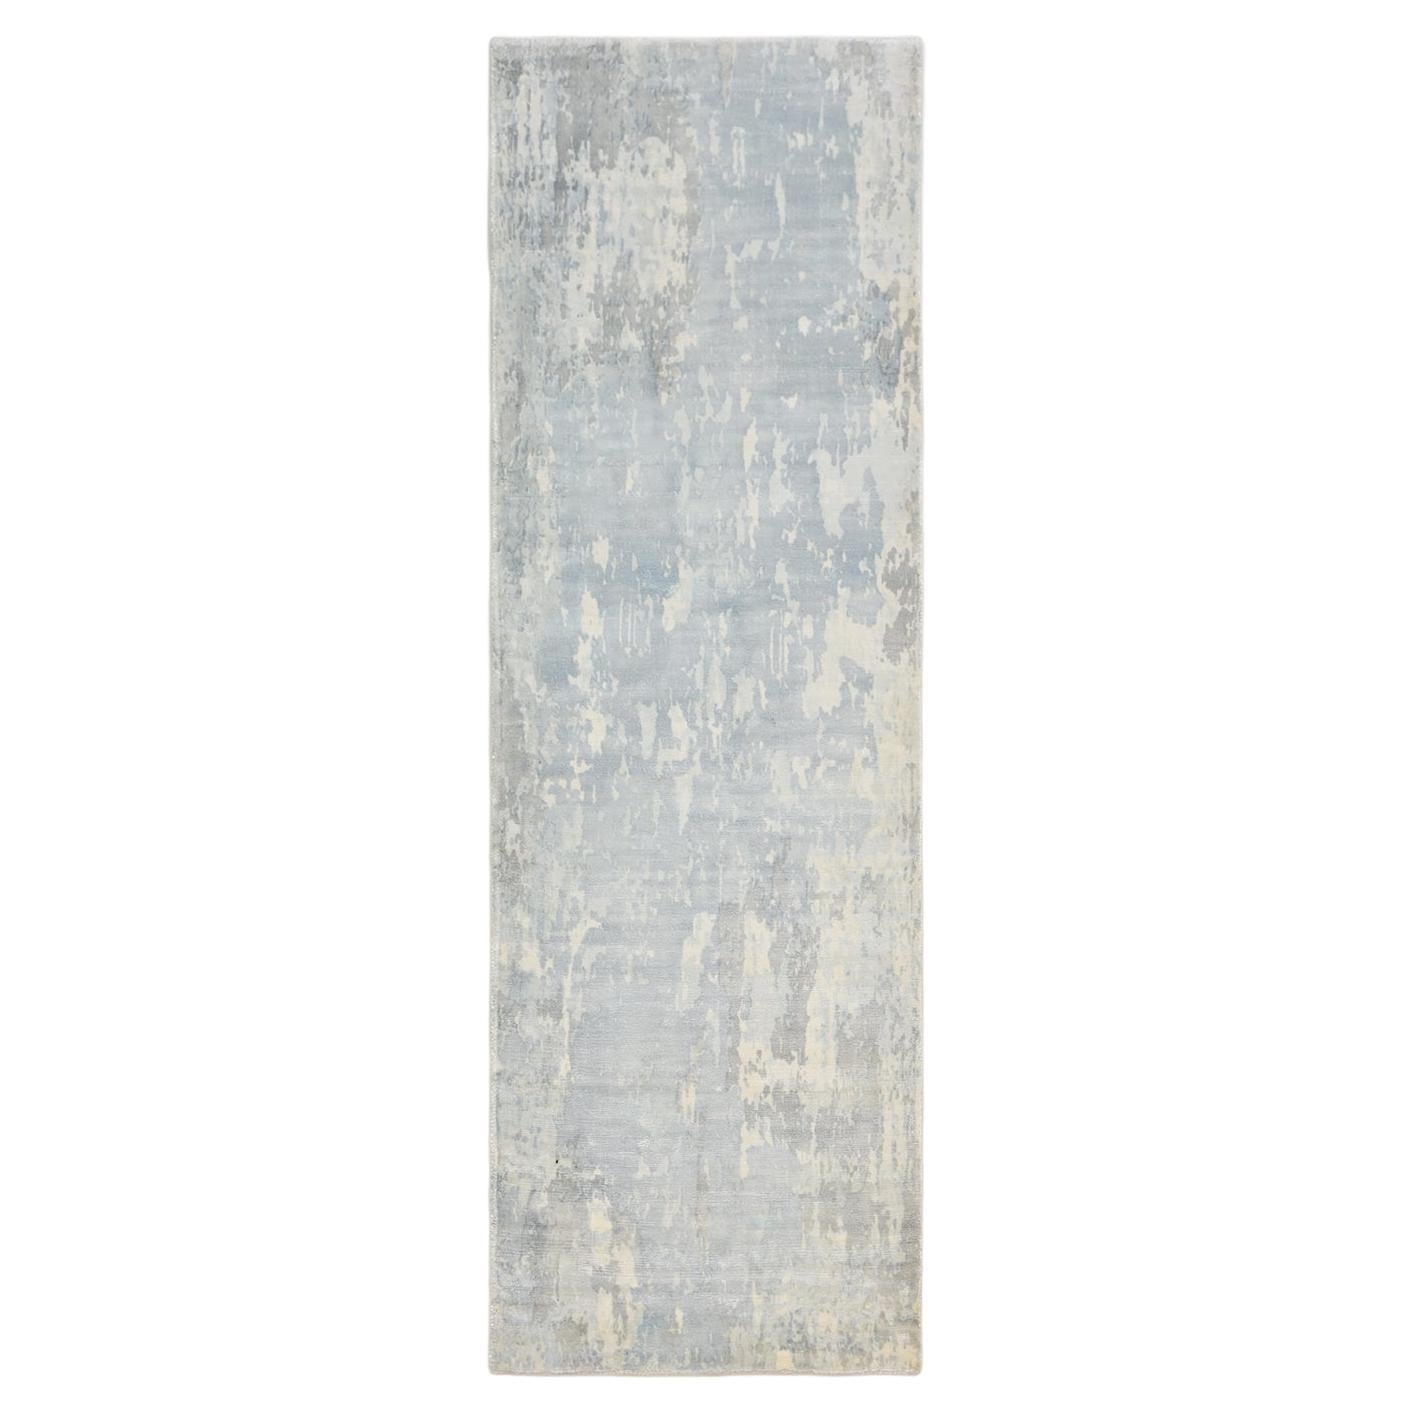 Solo Rugs Denali Contemporary Abstract Handmade Runner Ivory